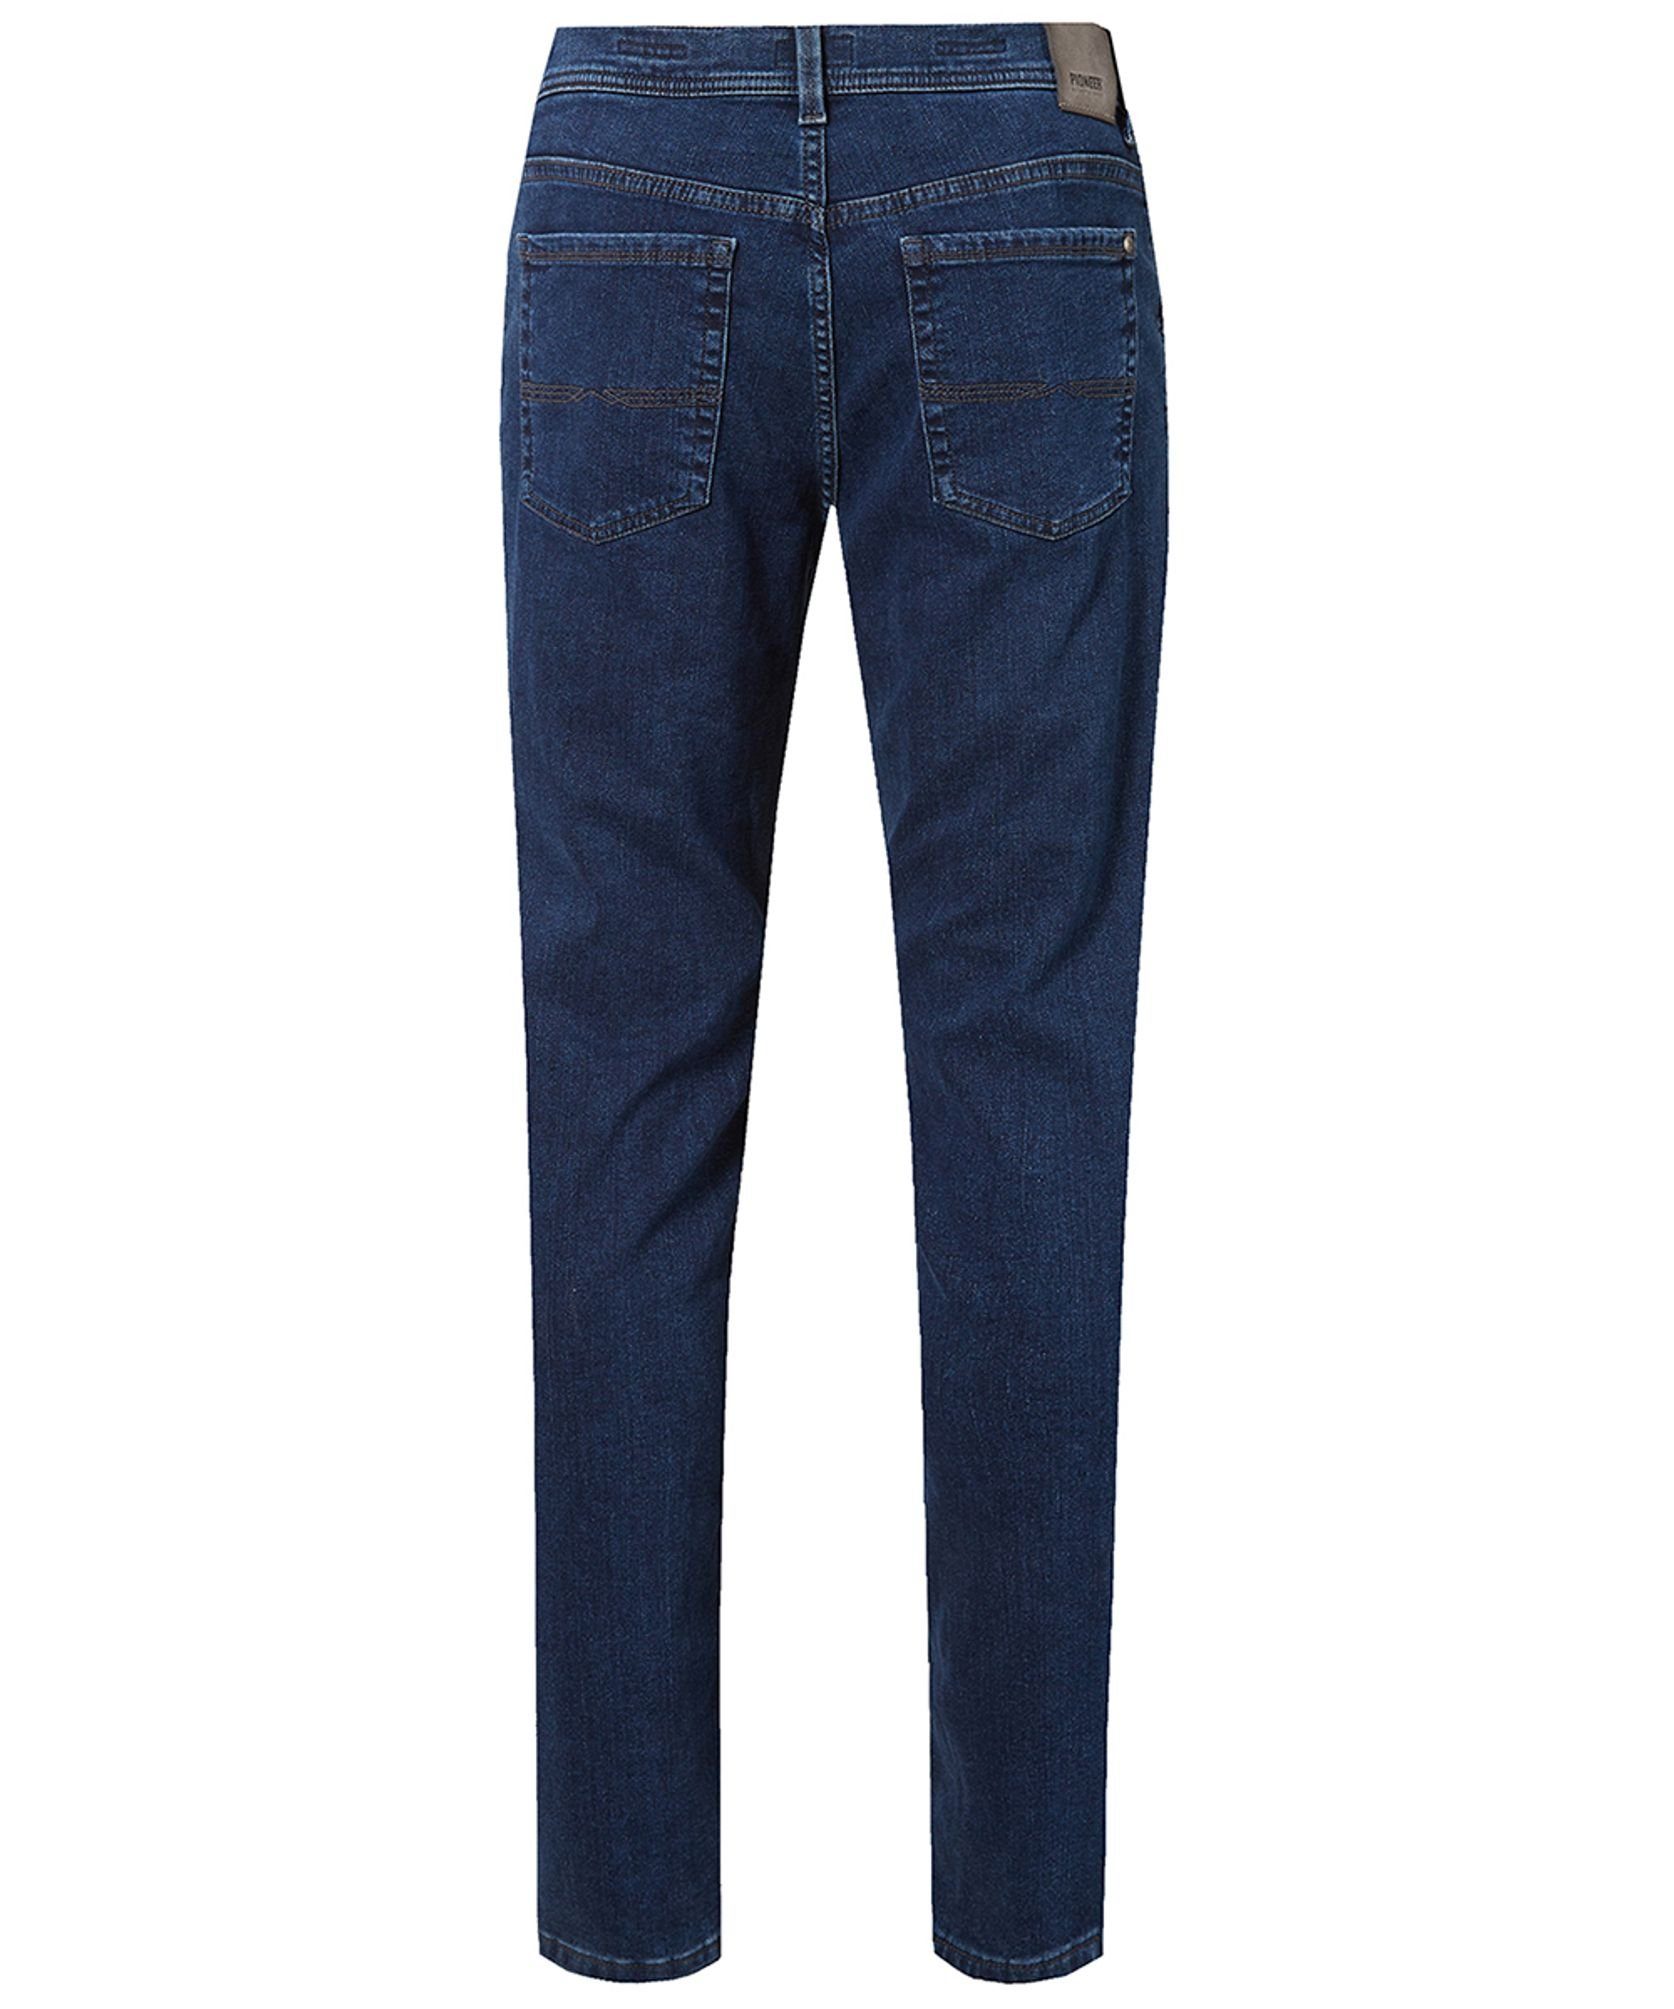 Authentic Pioneer Jeans 5-Pocket-Jeans dark P0 16801.06624 Stretch stonewash blue